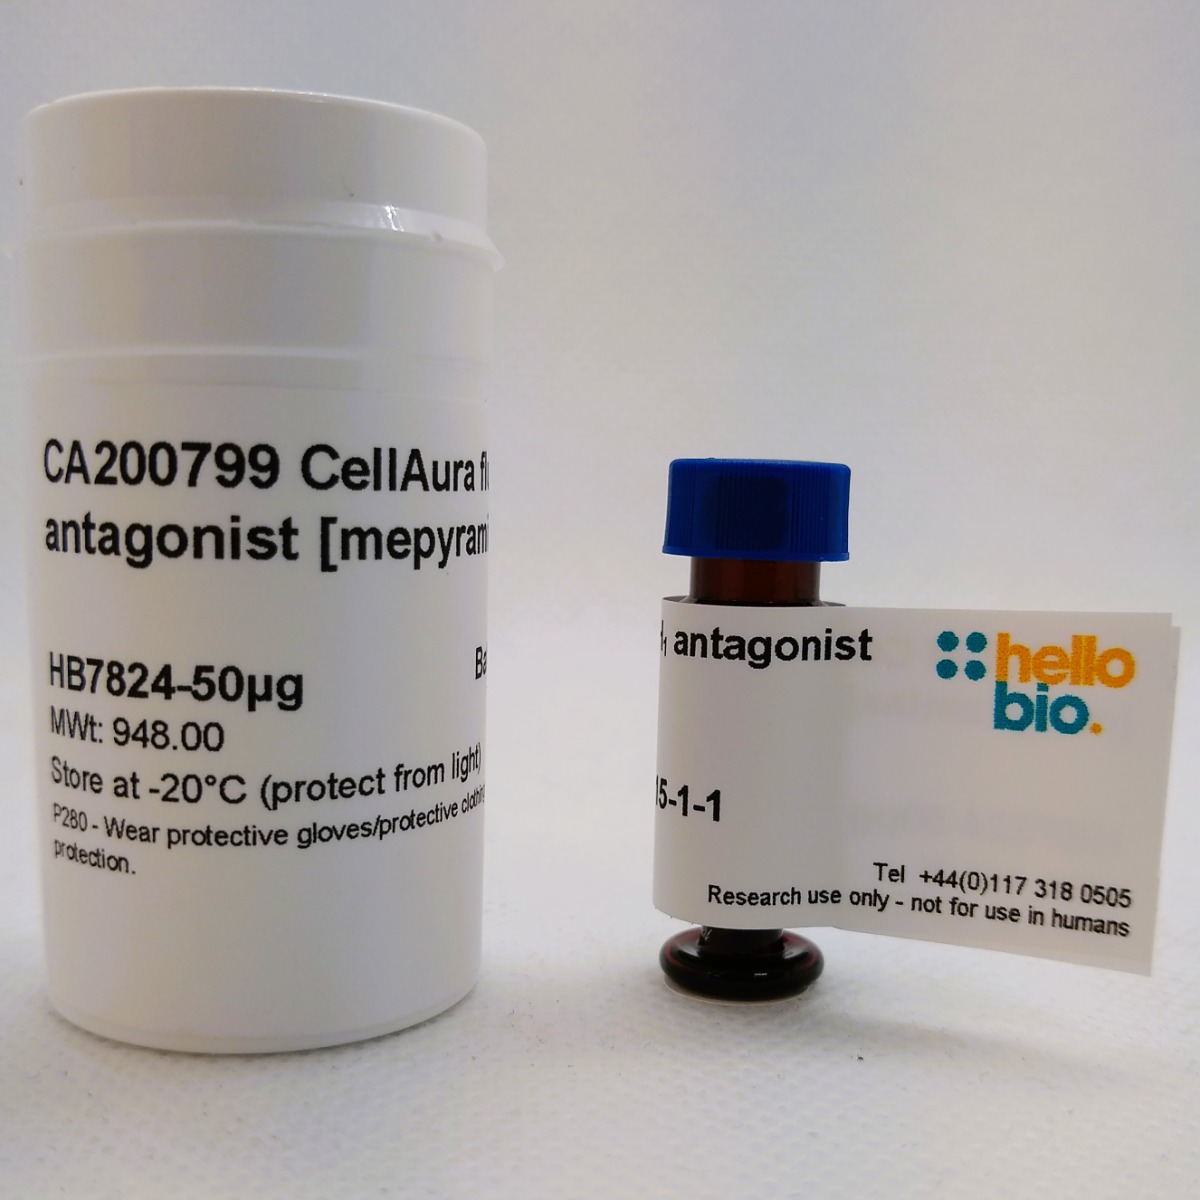 CellAura fluorescent H1 antagonist [mepyramine] product vial image | Hello Bio